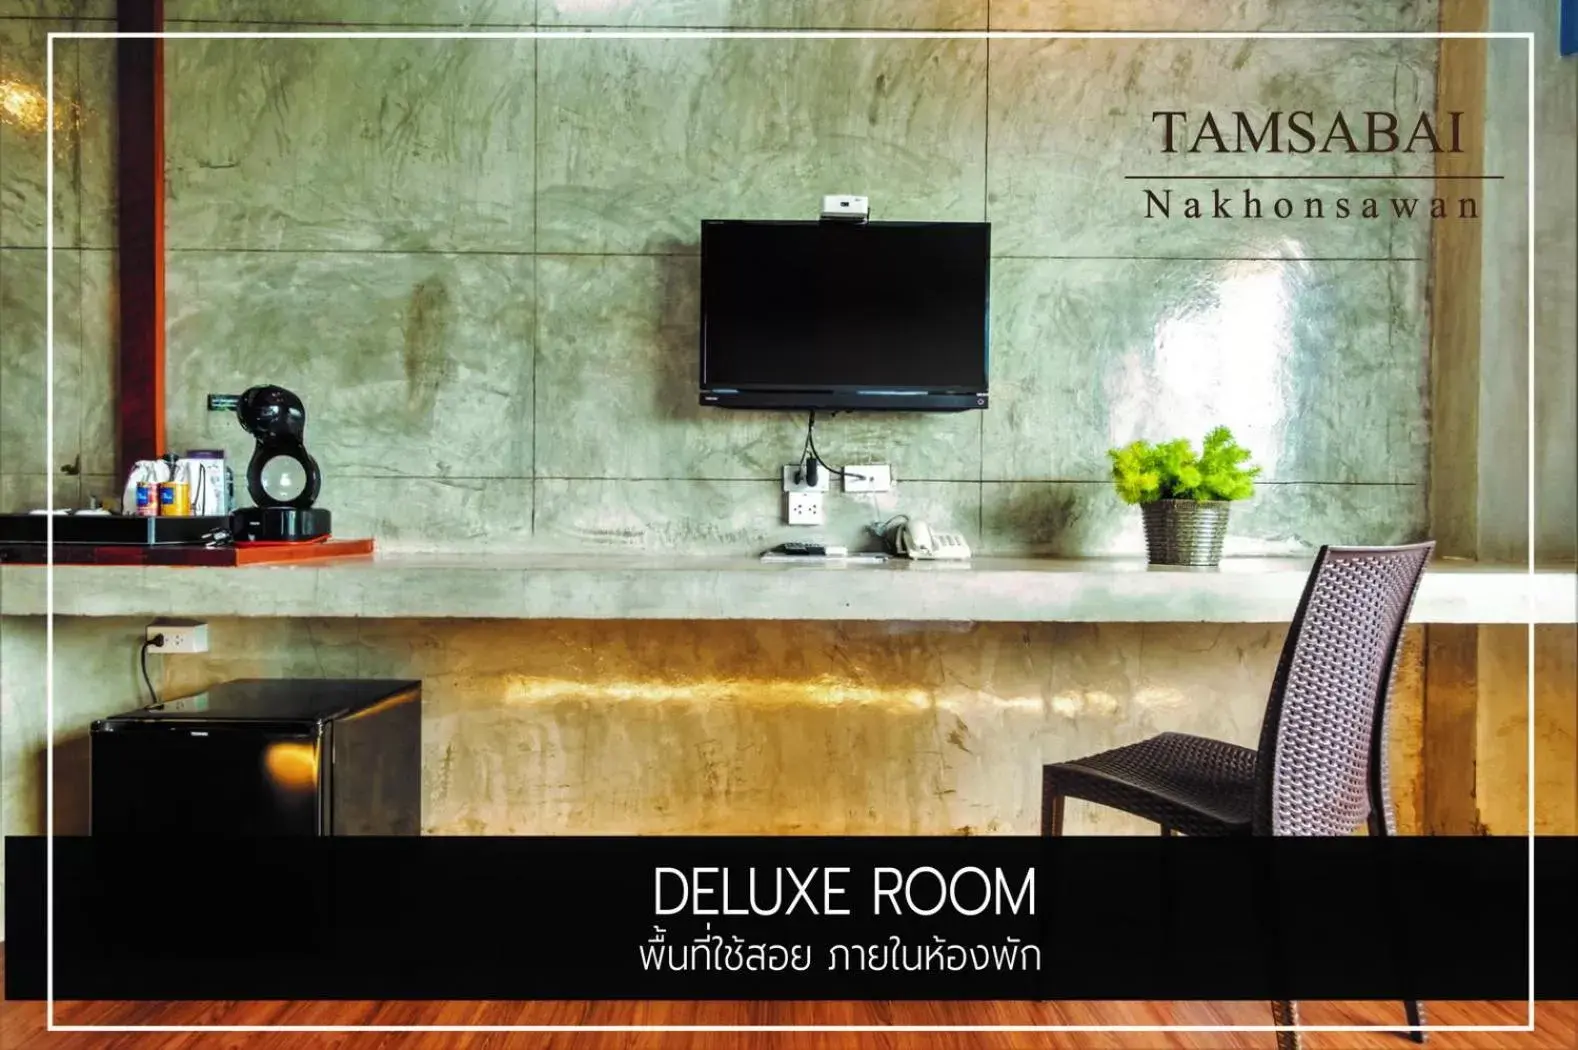 TV and multimedia in Tamsabai hotel